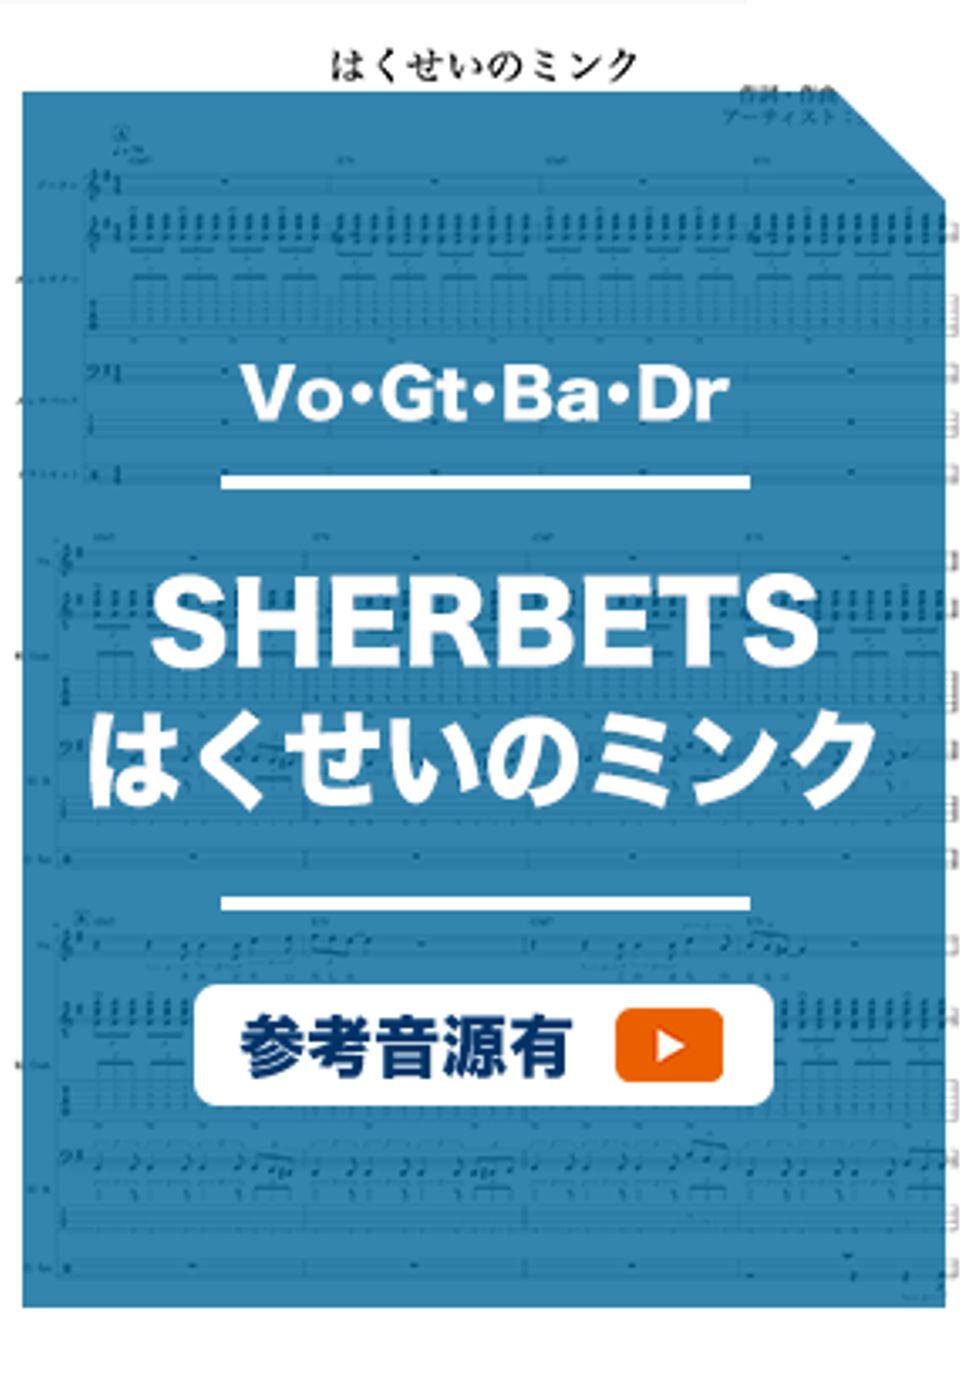 SHERBETS - はくせいのミンク (バンドスコア) by ホットレモンティーのレモン